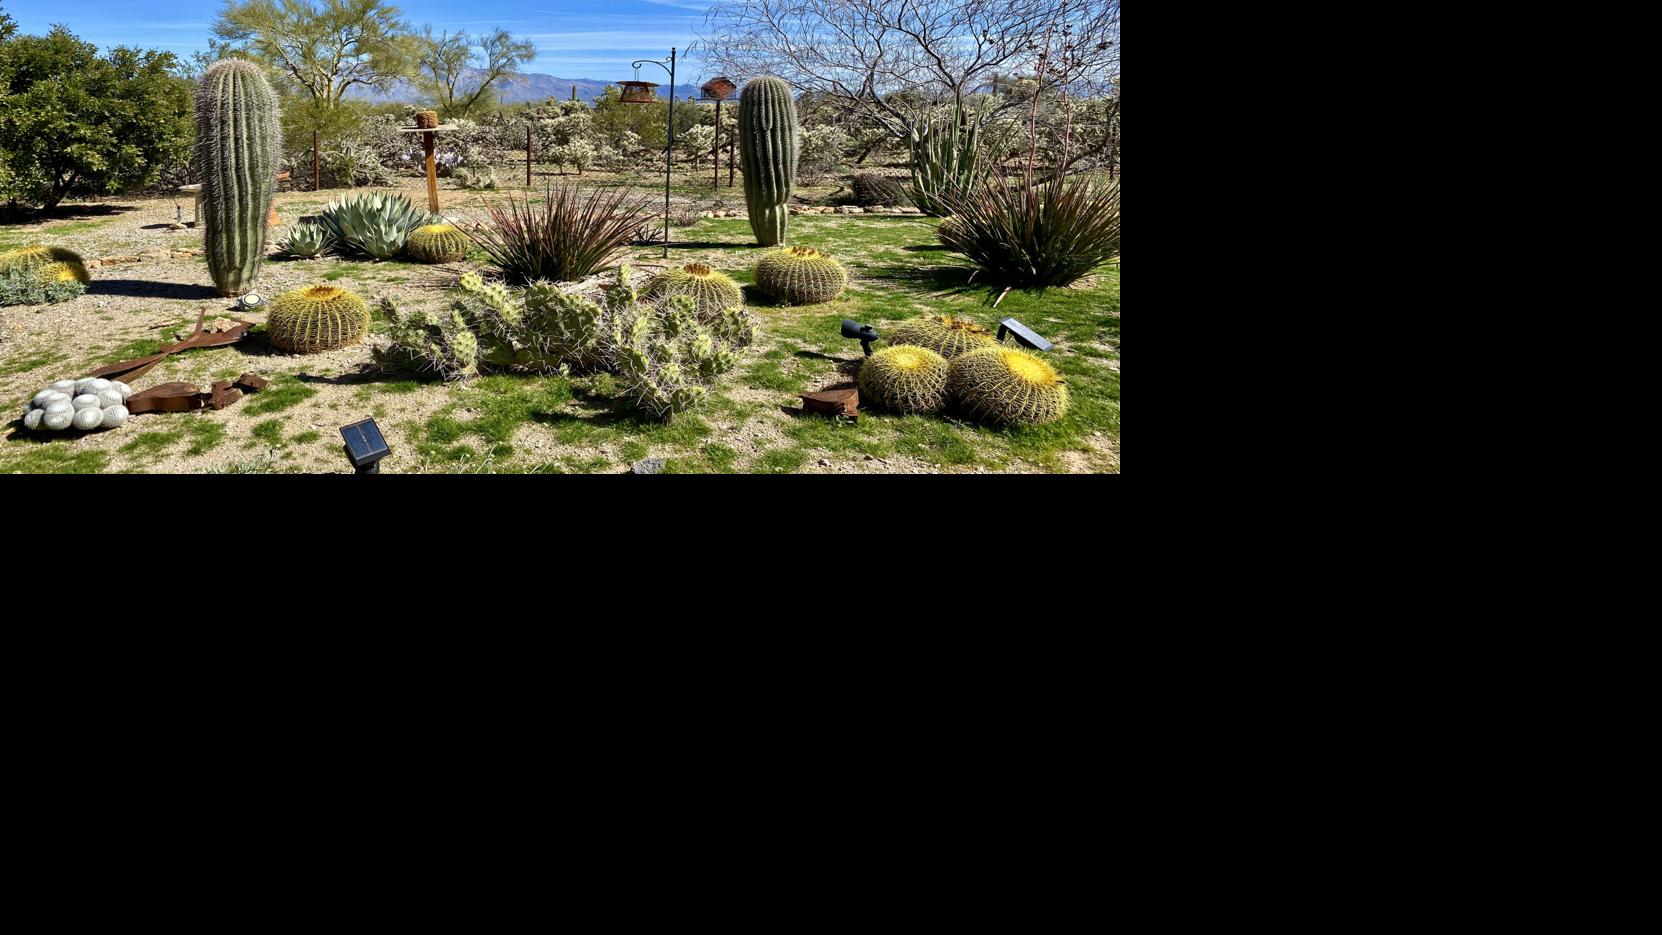 Take a walk through the gardens of Tucson’s pro green thumbs